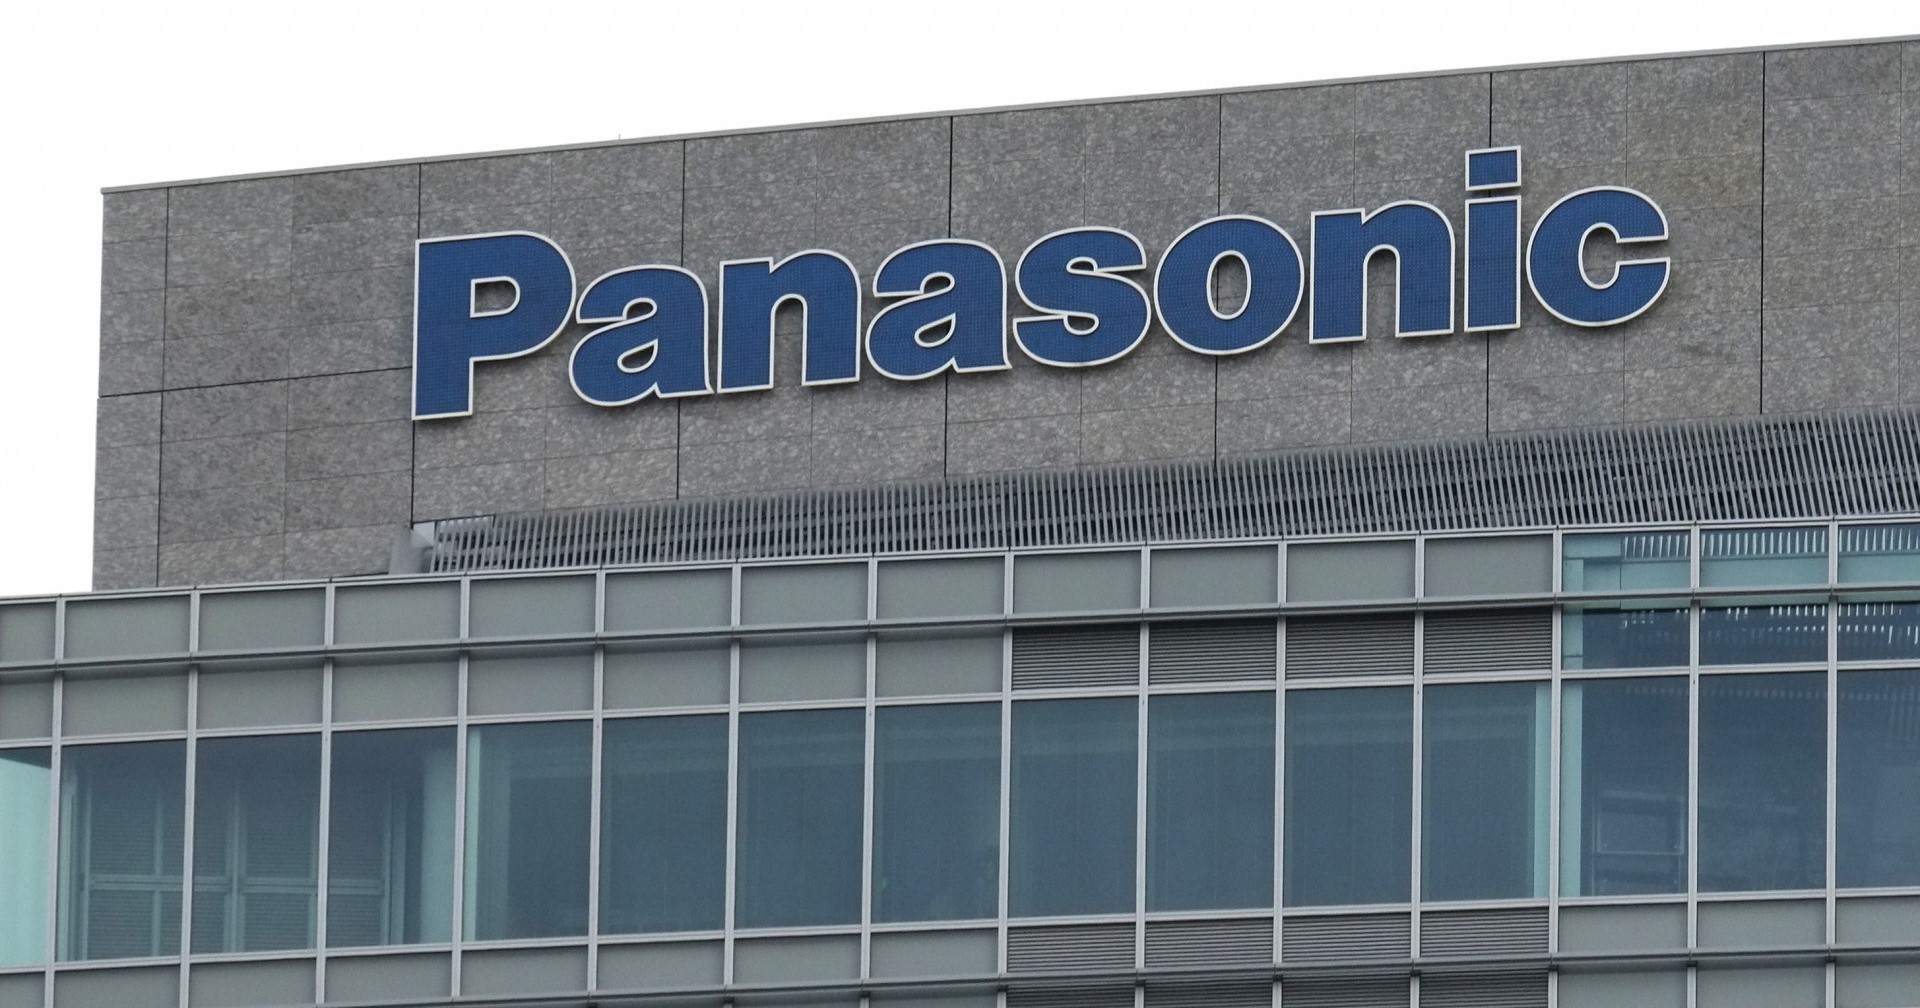 Panasonic เสนอระบบป้องกันภัยไซเบอร์ต่อยานยนต์